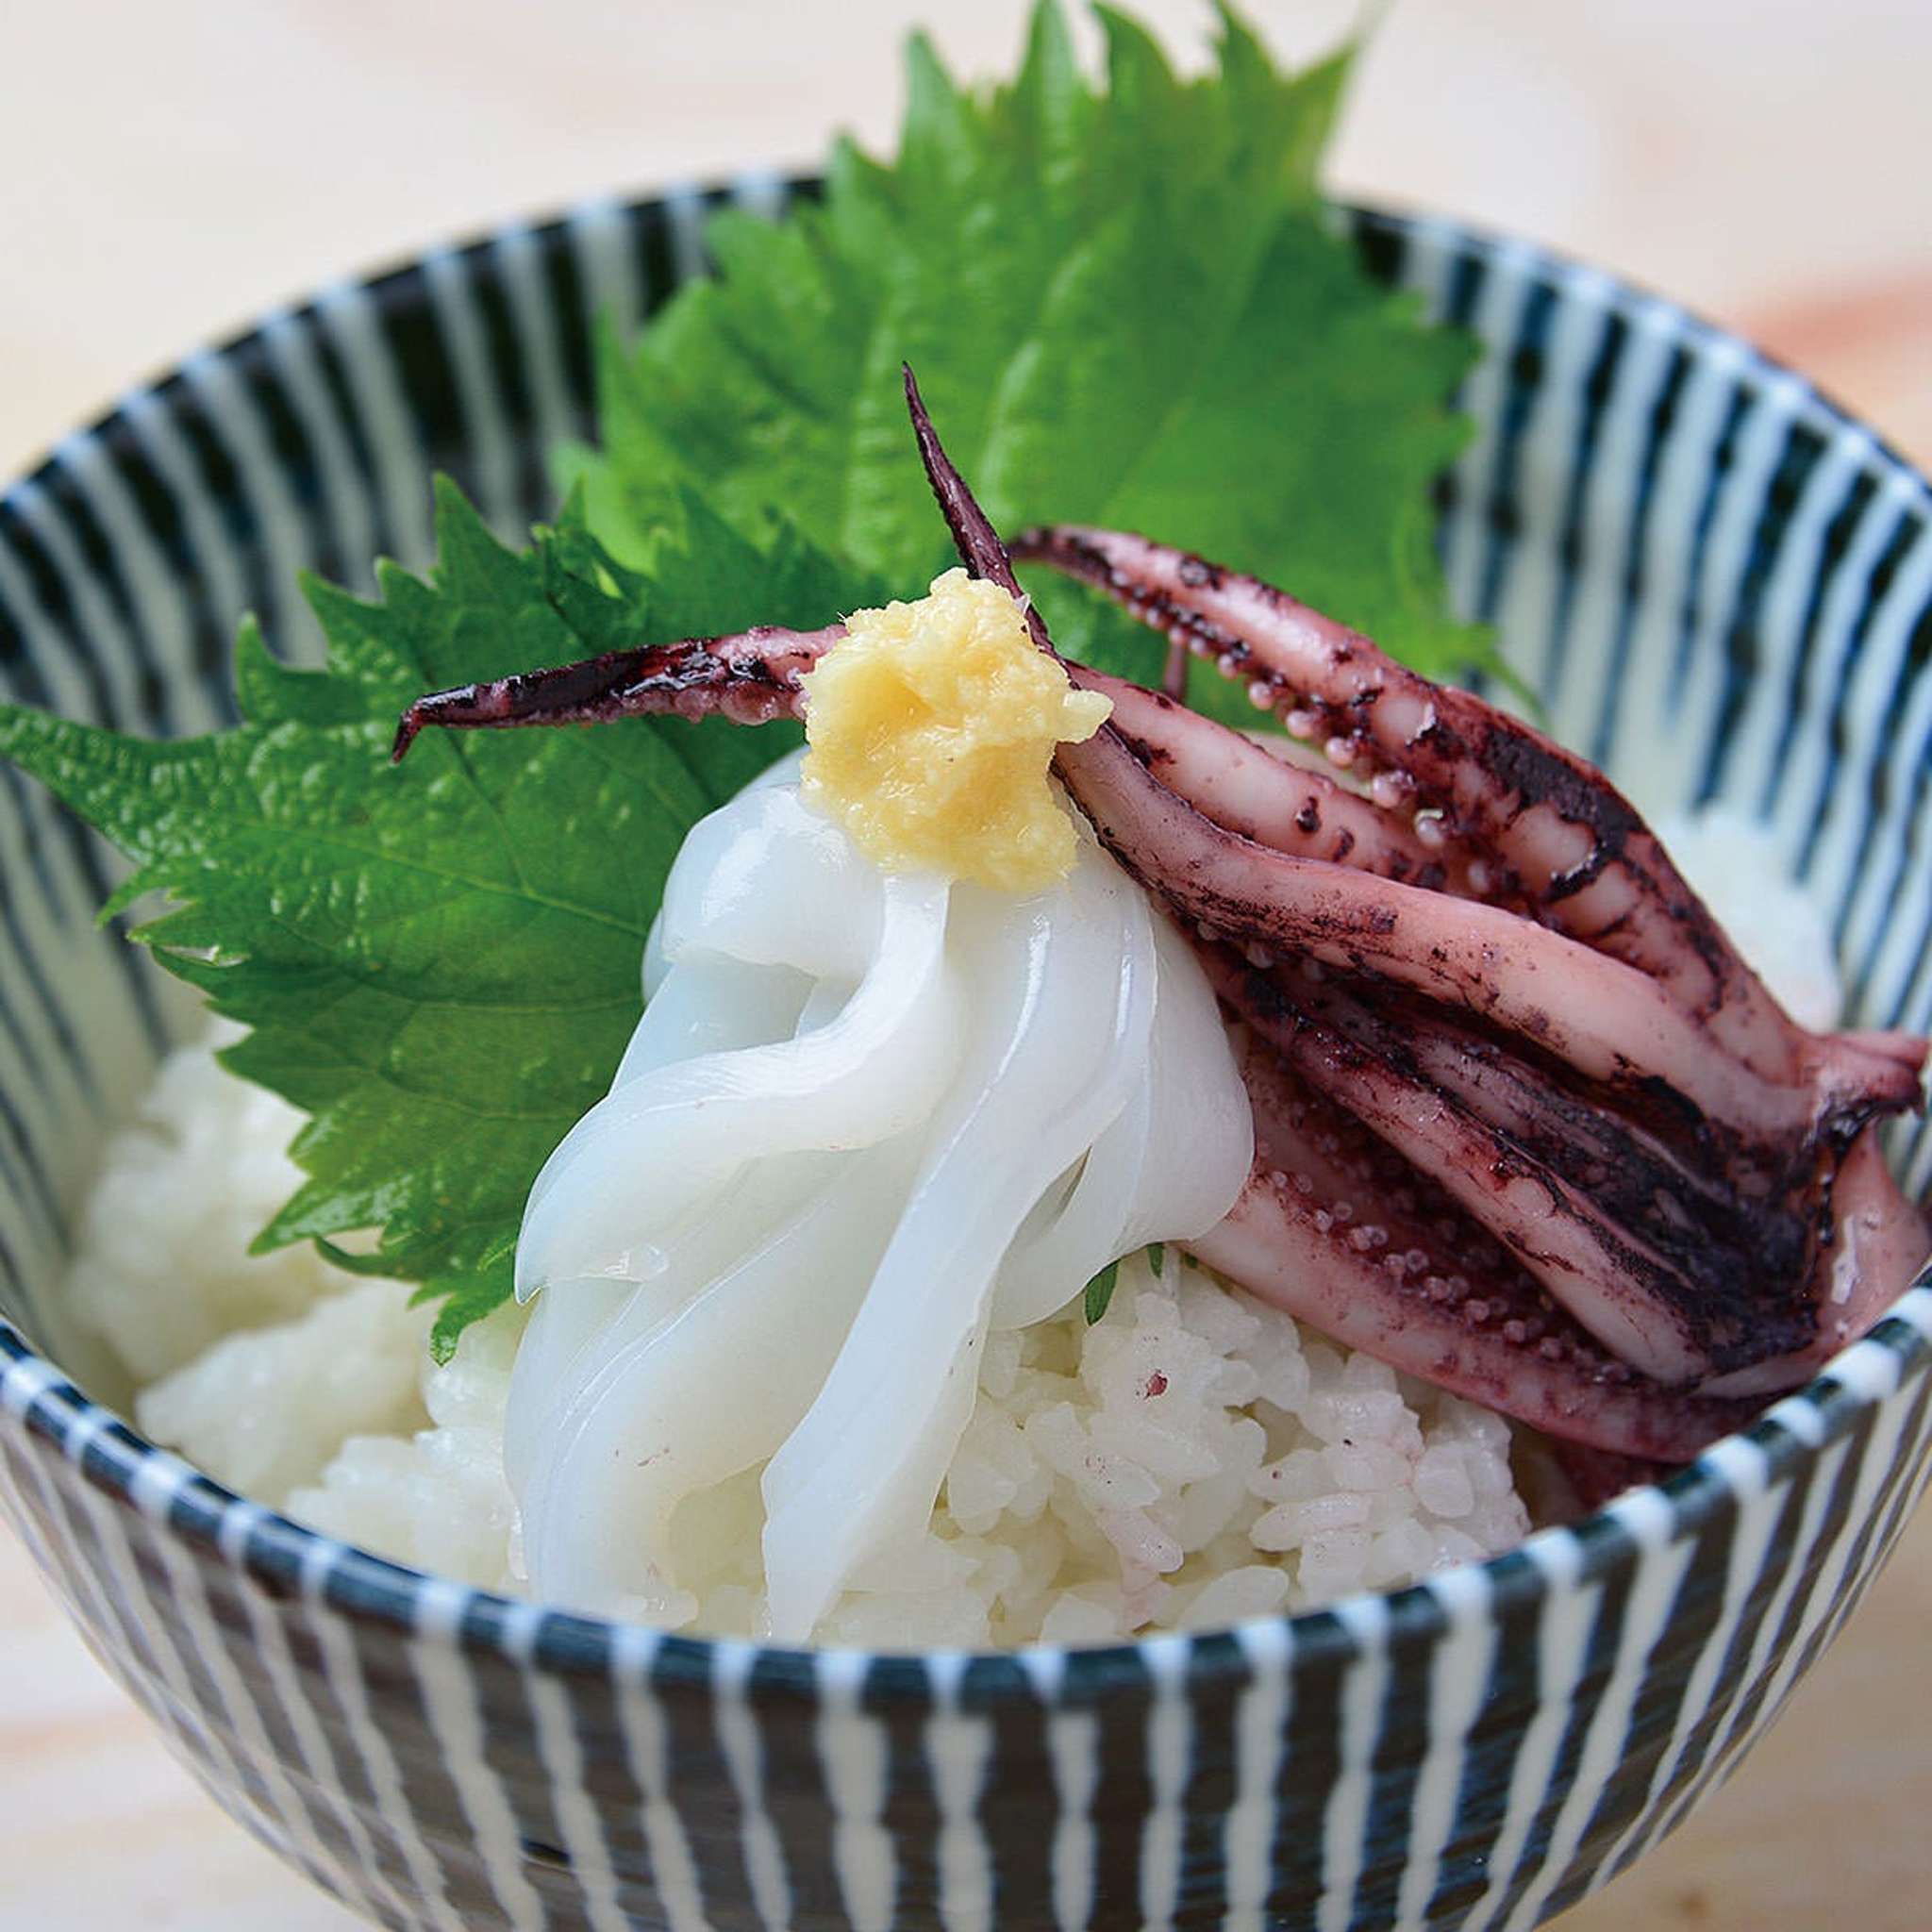 Tottori rice “Kinumusume”